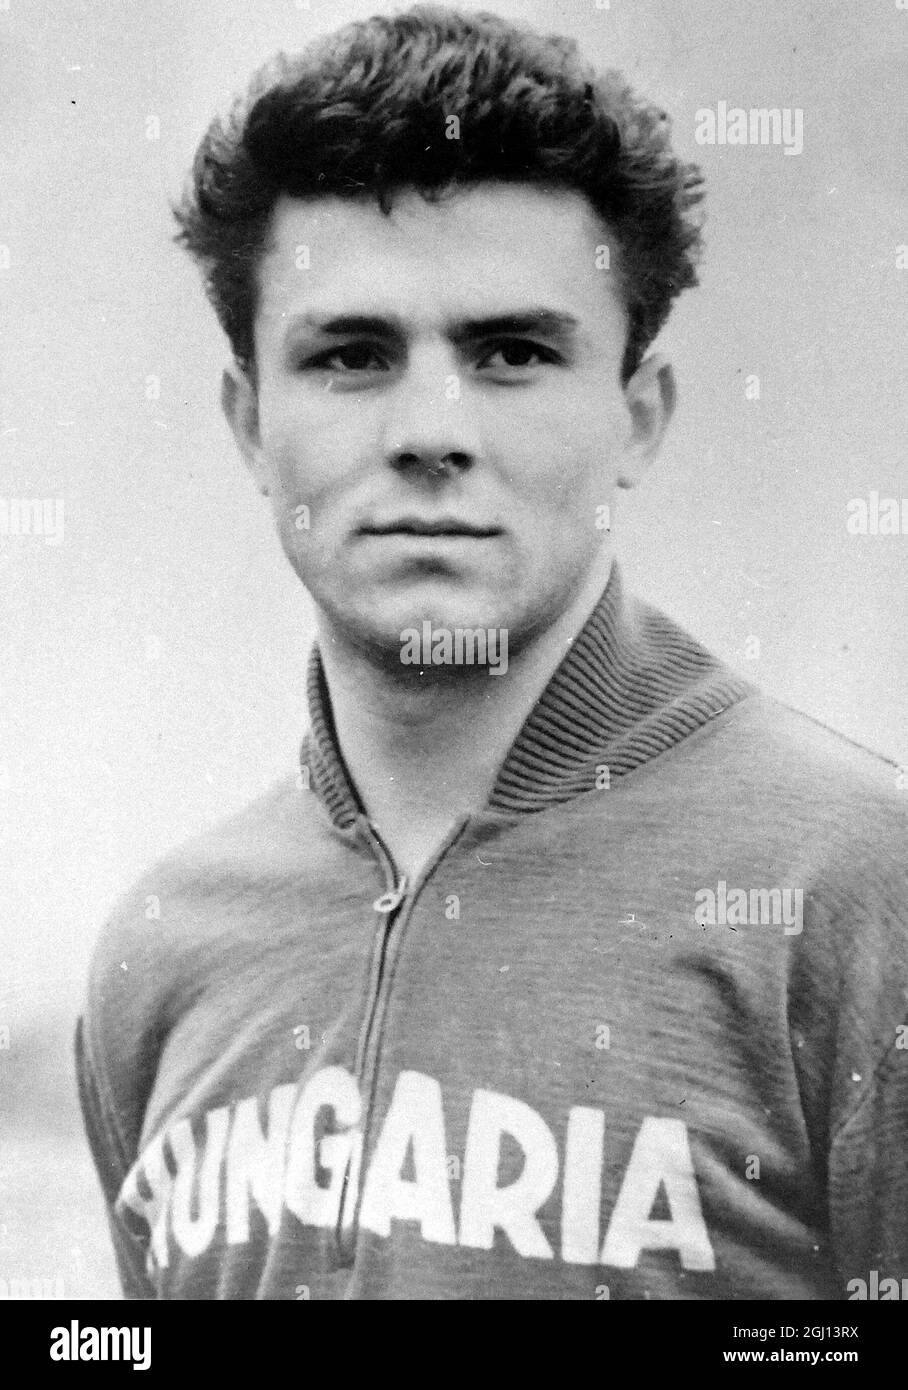 KALMAN SOVARI - PORTRAIT OF FOOTBALLER - HUNGARIAN INTERNATIONA FOOTBALL PLAYER ; 11 MAY 1962 Stock Photo